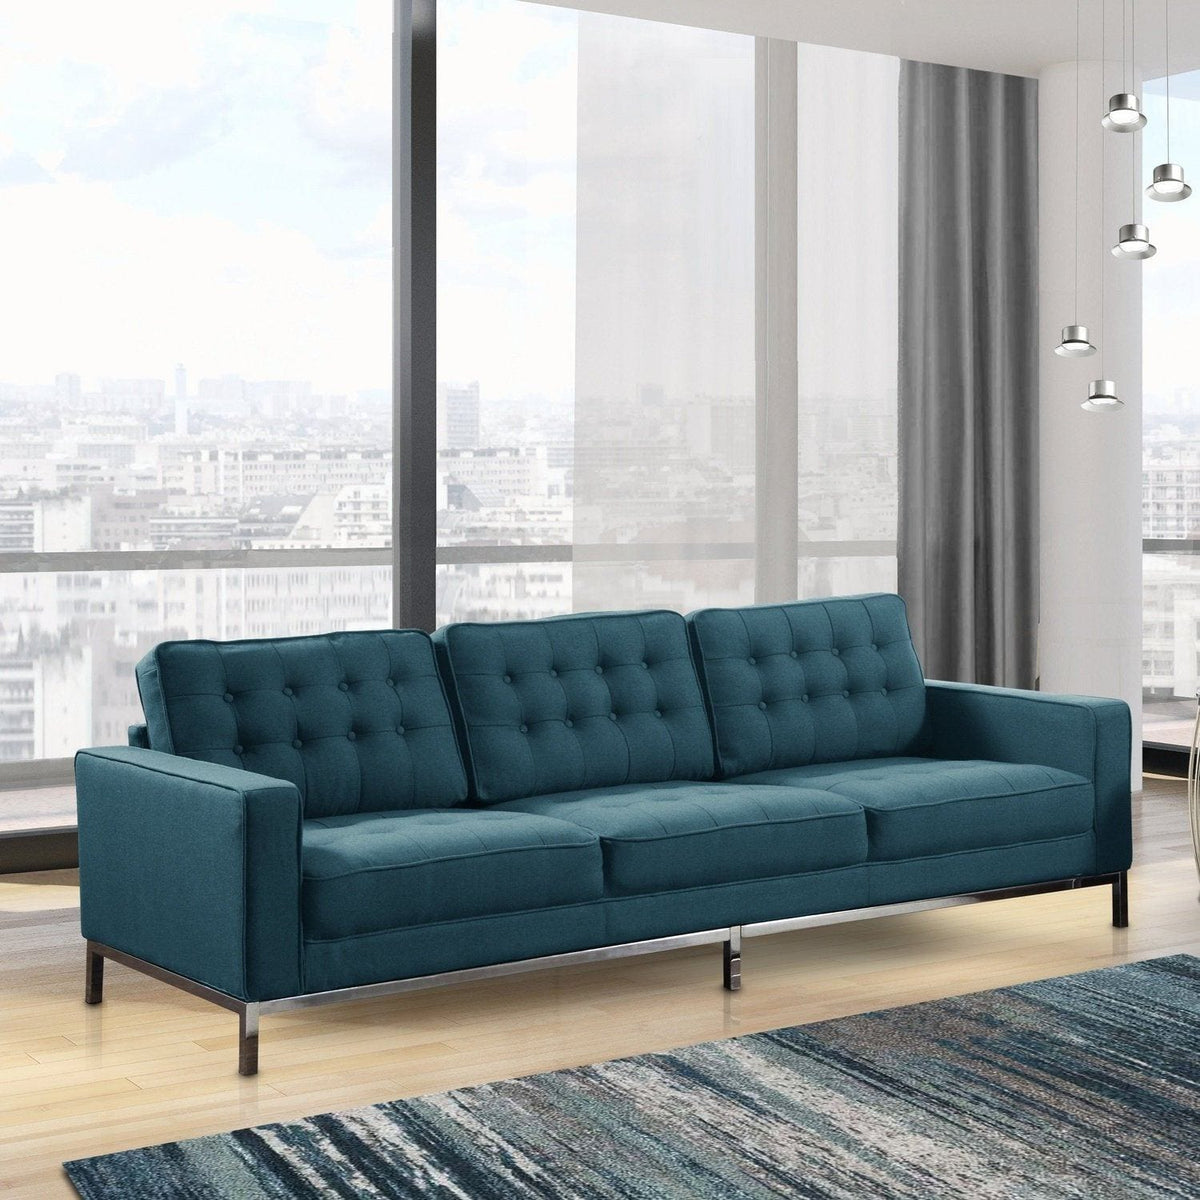 Iconic Home Draper Three Seat Tufted Linen Sofa Blue